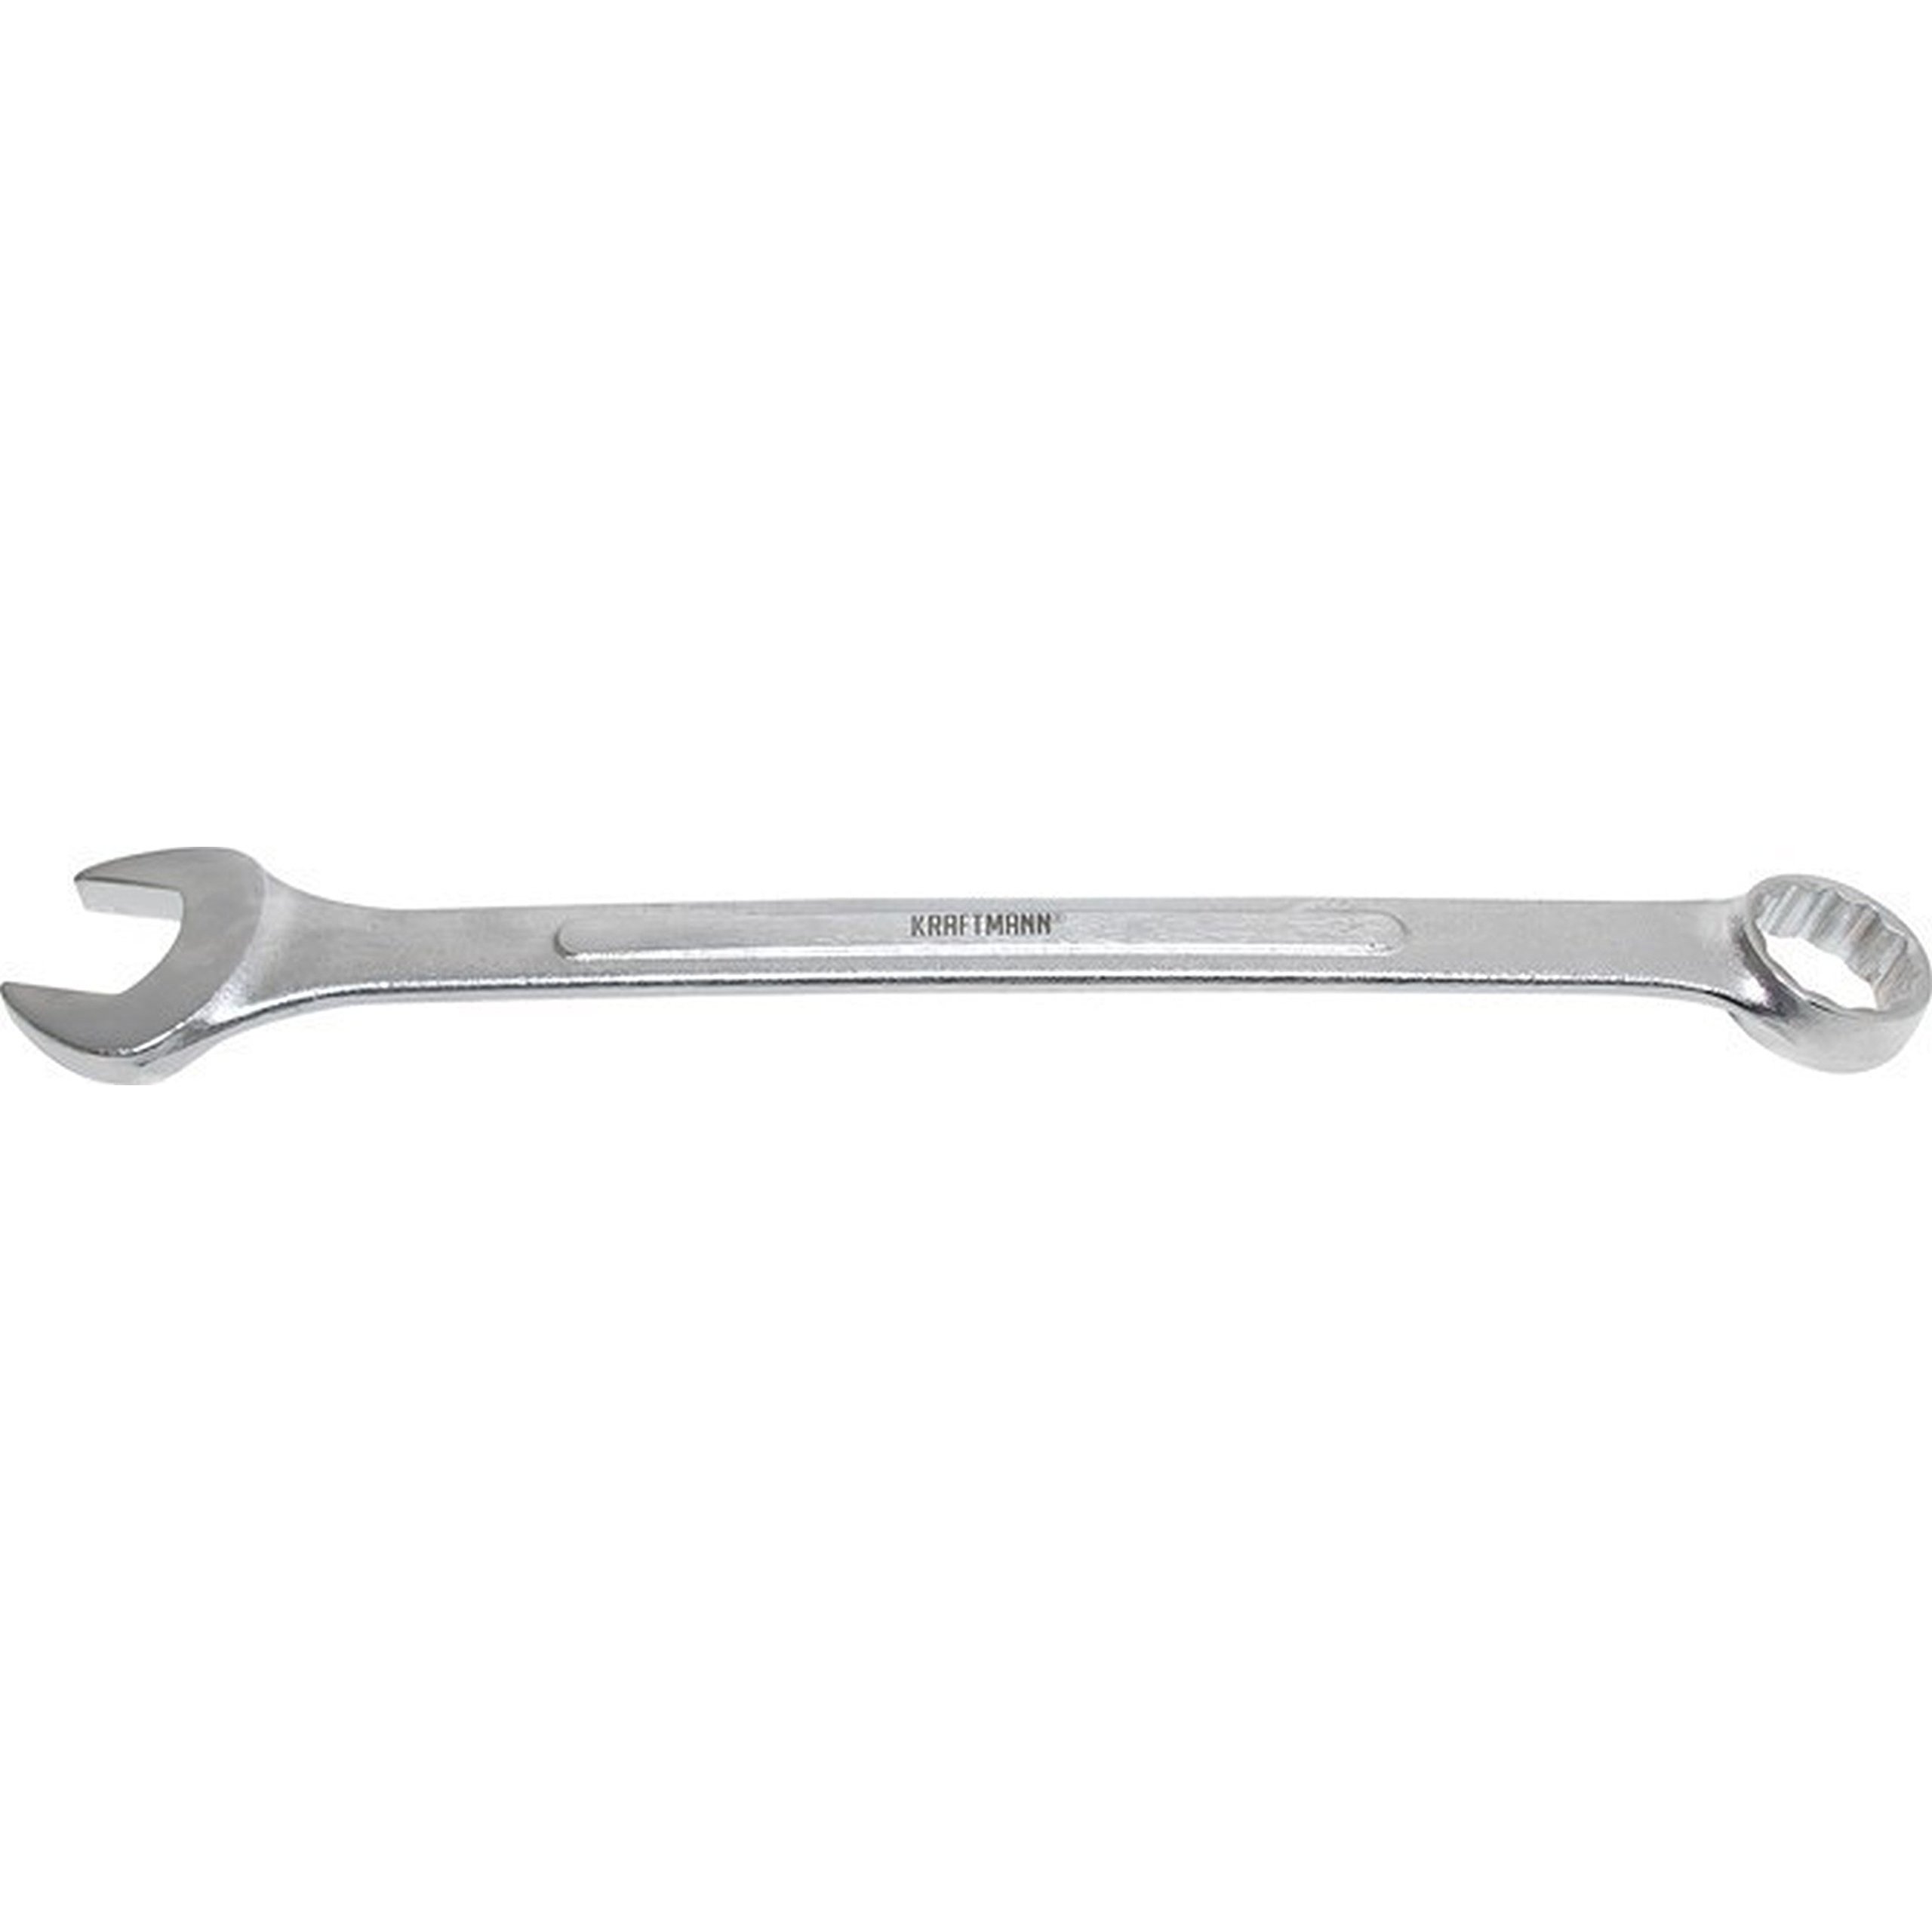 Kraftmann 1185-34 Combination Wrench, Silver, 34 mm